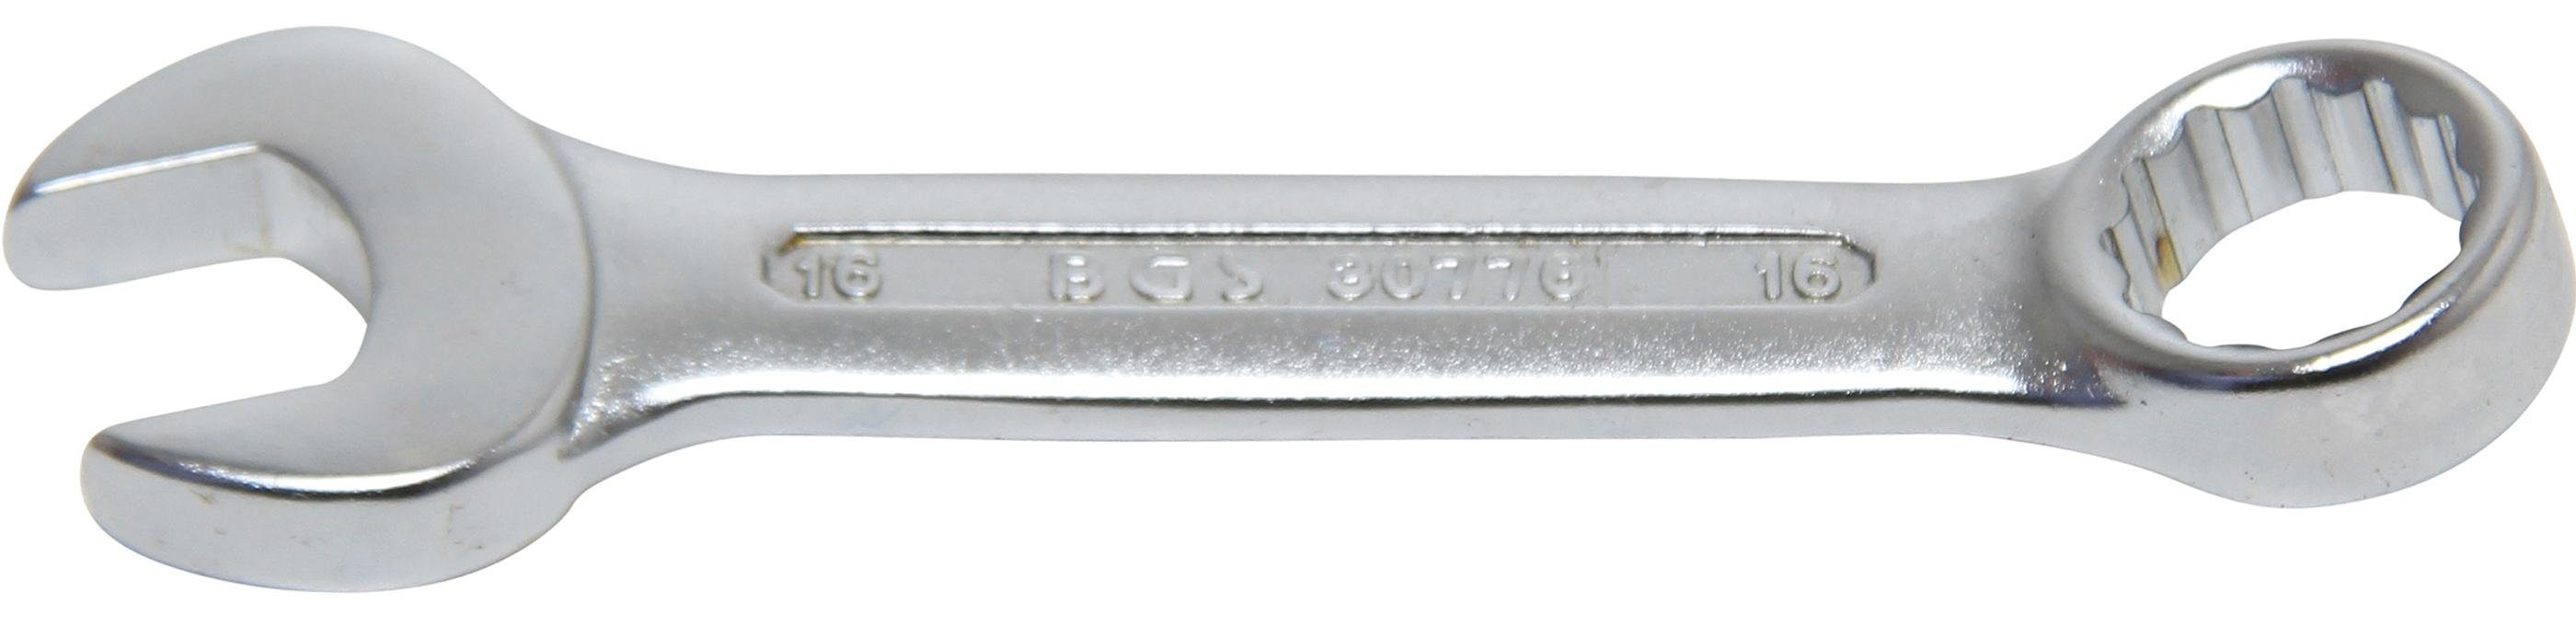 Maul-Ringschlüssel, 16 kurz, BGS mm technic extra Maulschlüssel SW